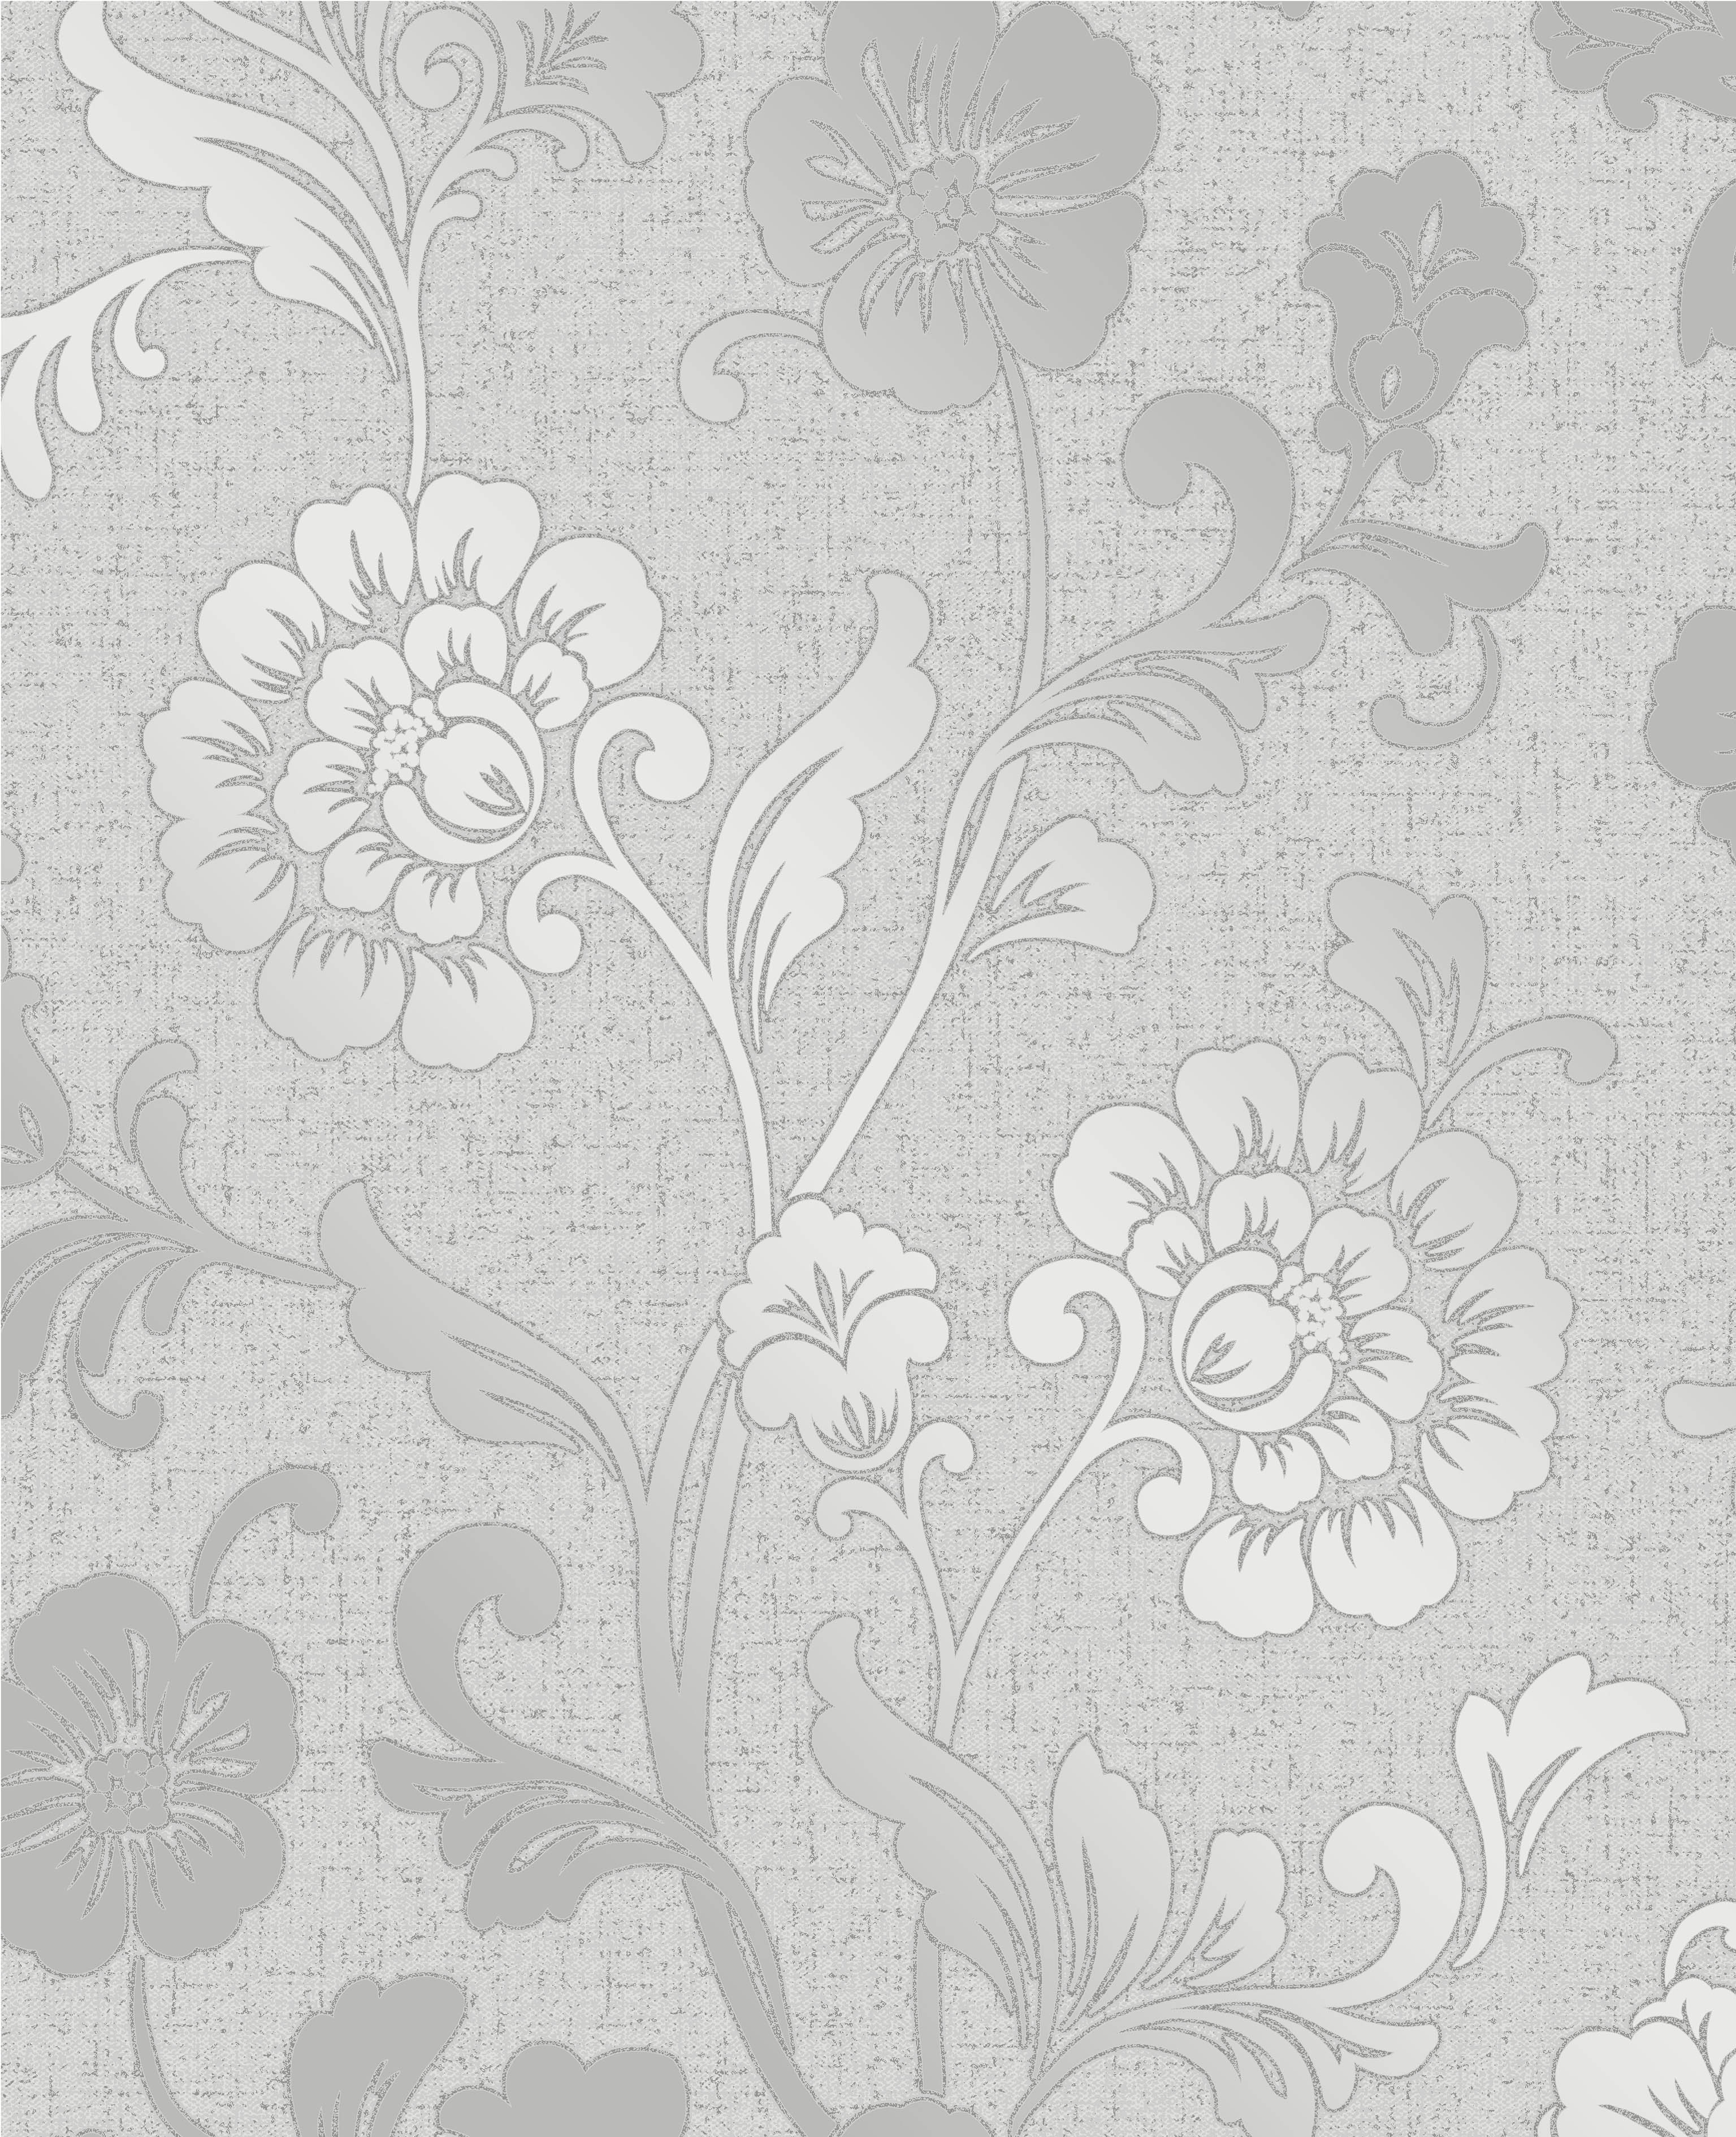 rococo wallpaper,wallpaper,pattern,floral design,pedicel,botany